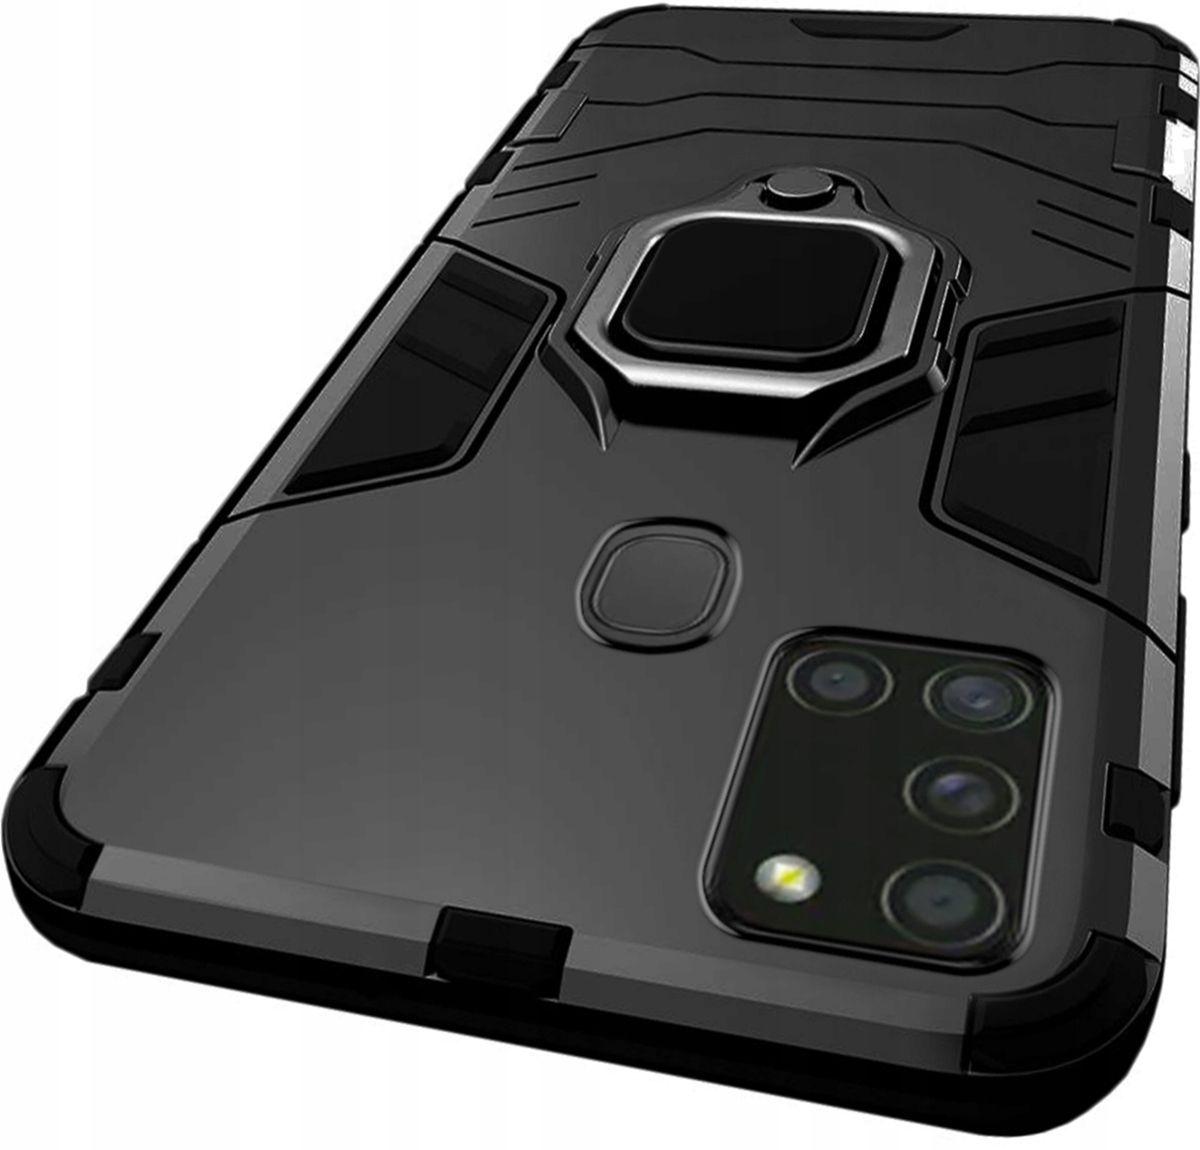 Armored case holder ring Samsung A41 (SM-A415) black